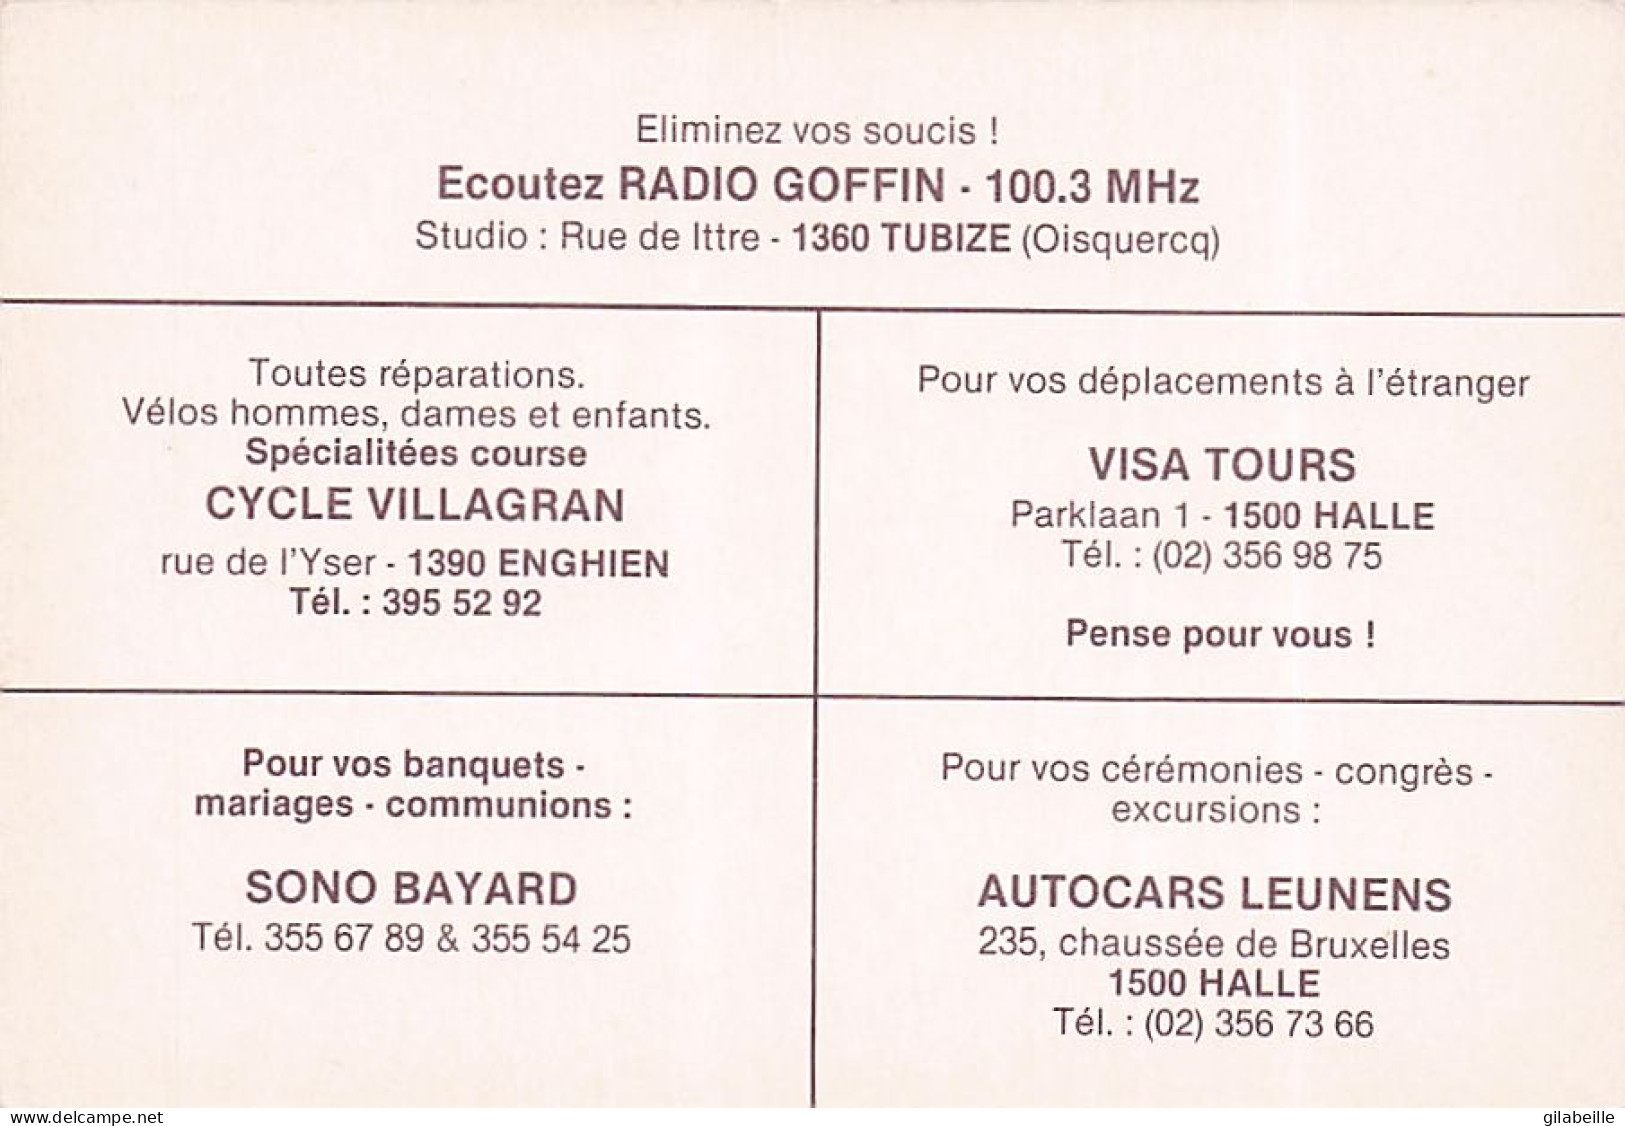 Vélo Coureur Cycliste  Belge Michel Dernies - Team Fangio Marc  - Cycling - Cyclisme - Ciclismo - Wielrennen - Signée - Radsport